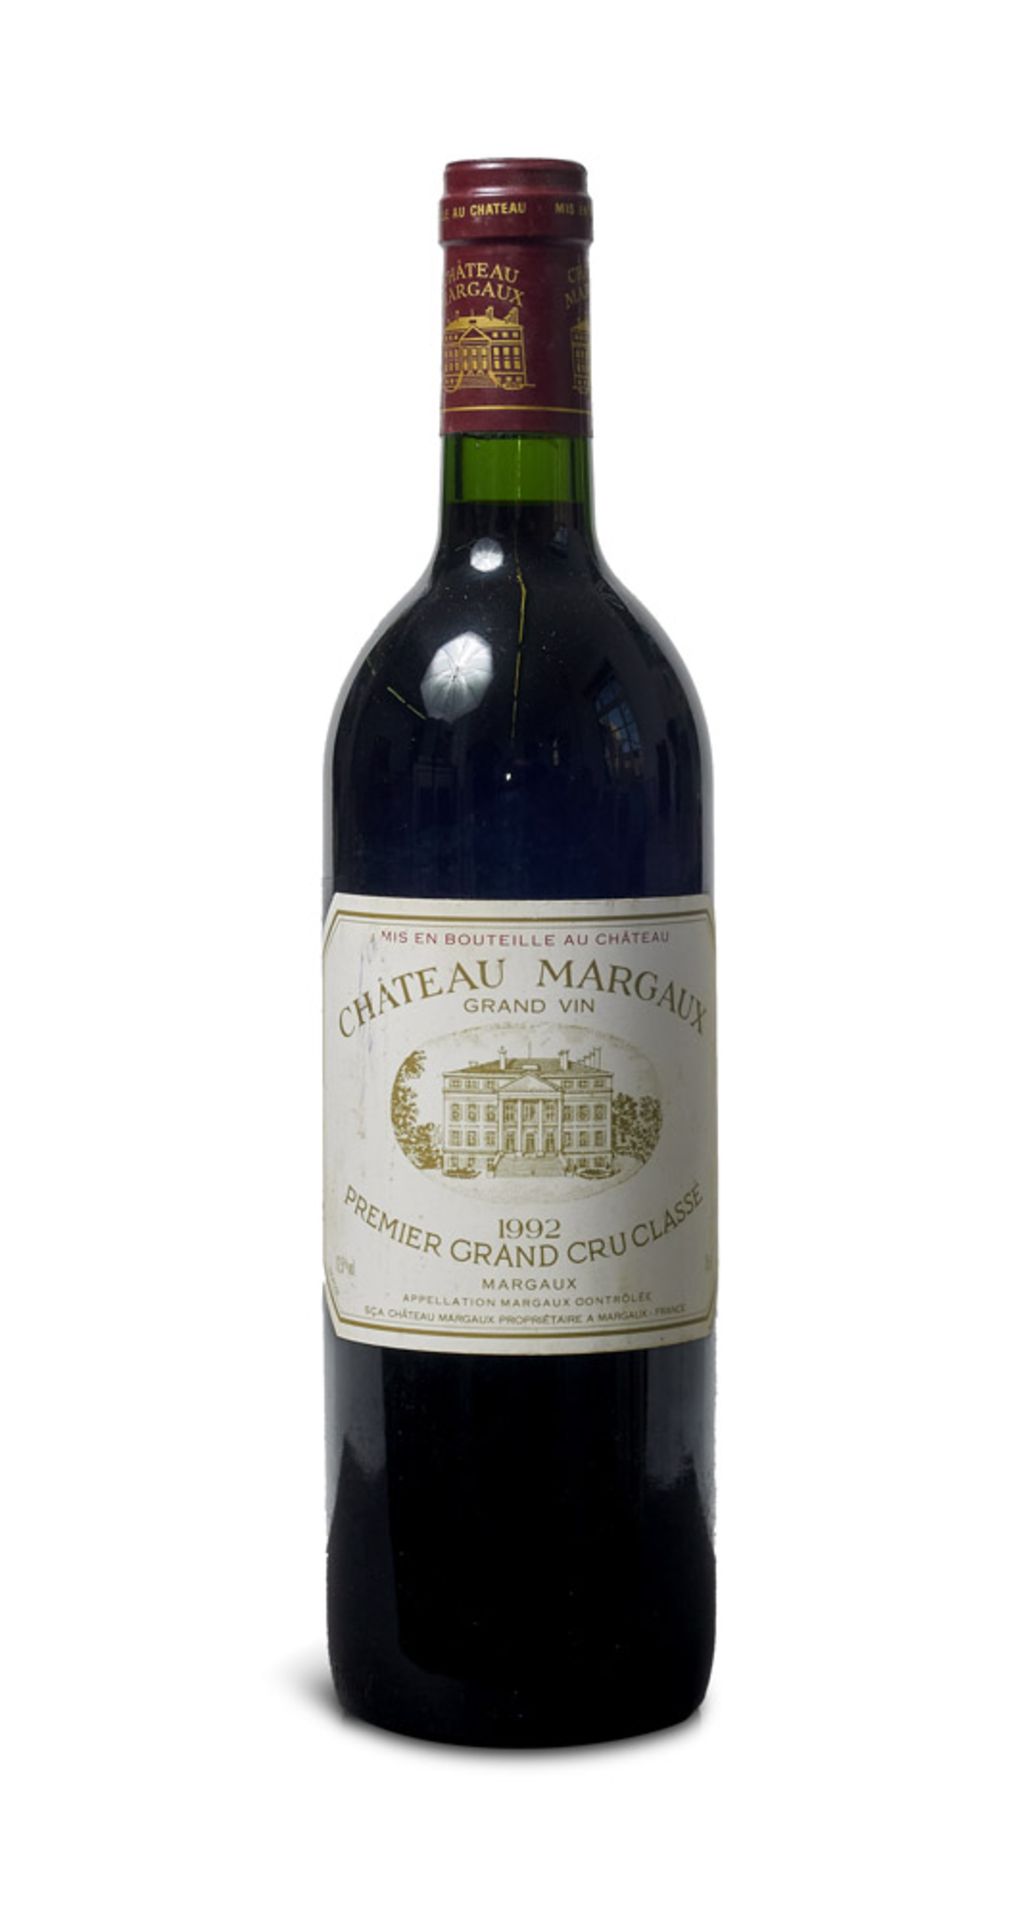 Spiritiuosen - Wein - - Chateau Margaux. Premier Grand Cru Classé 1992. (into neck).